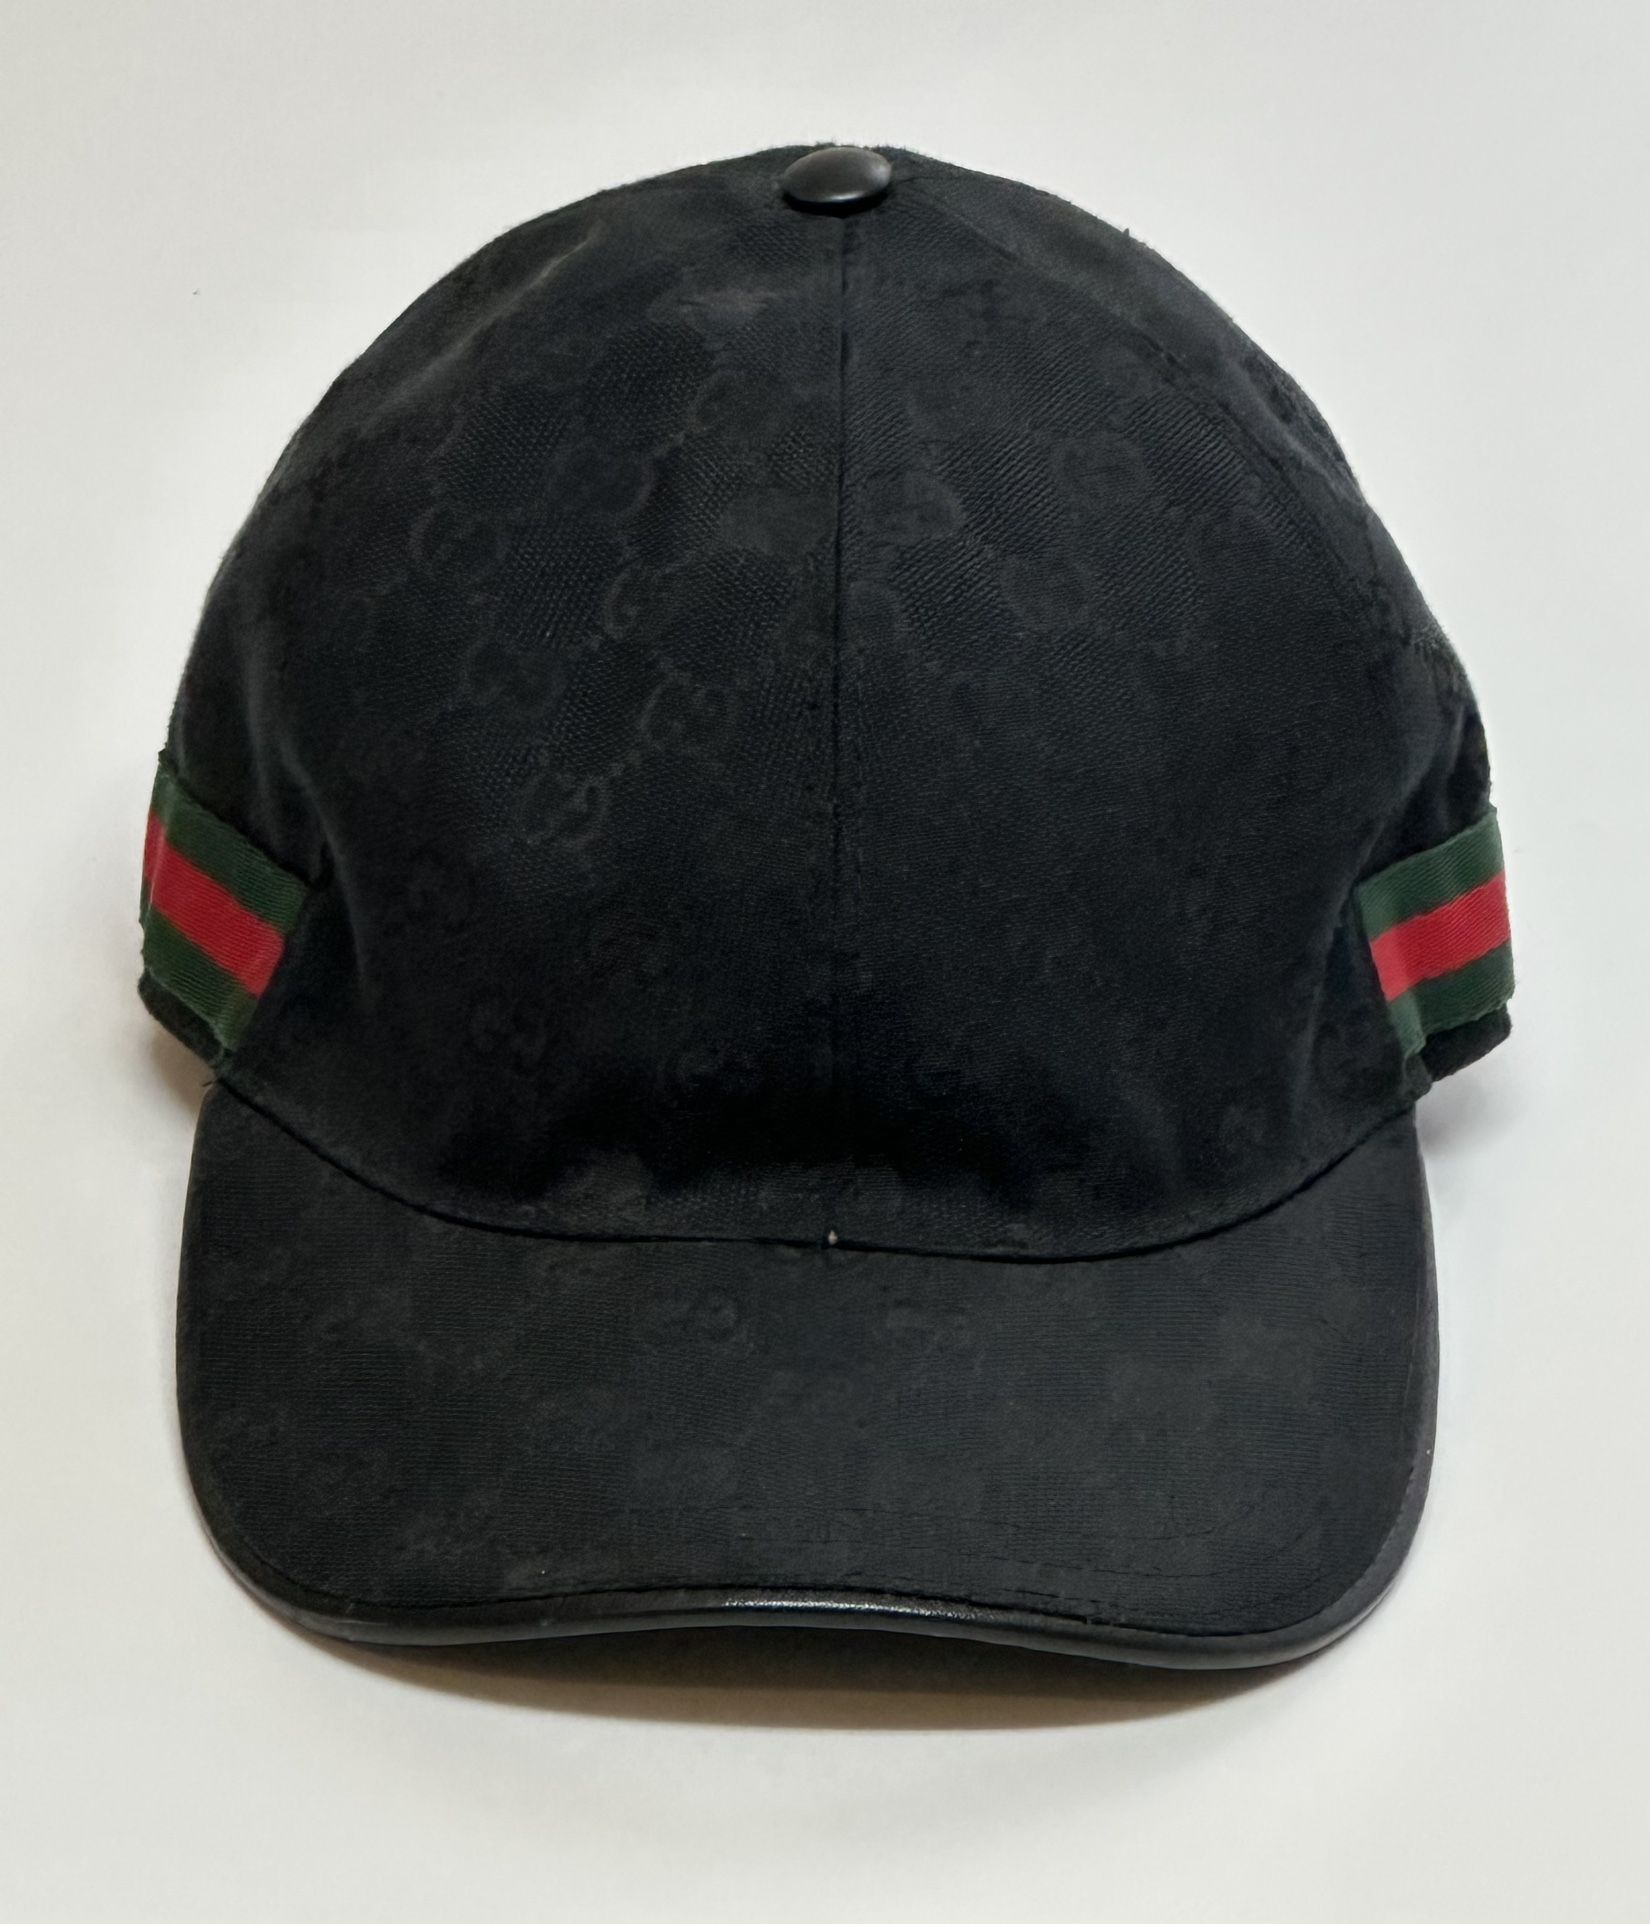 Original Gucci Men’s Canvas Hat With Web|XXL Strap Back Adjustable Cap|Black